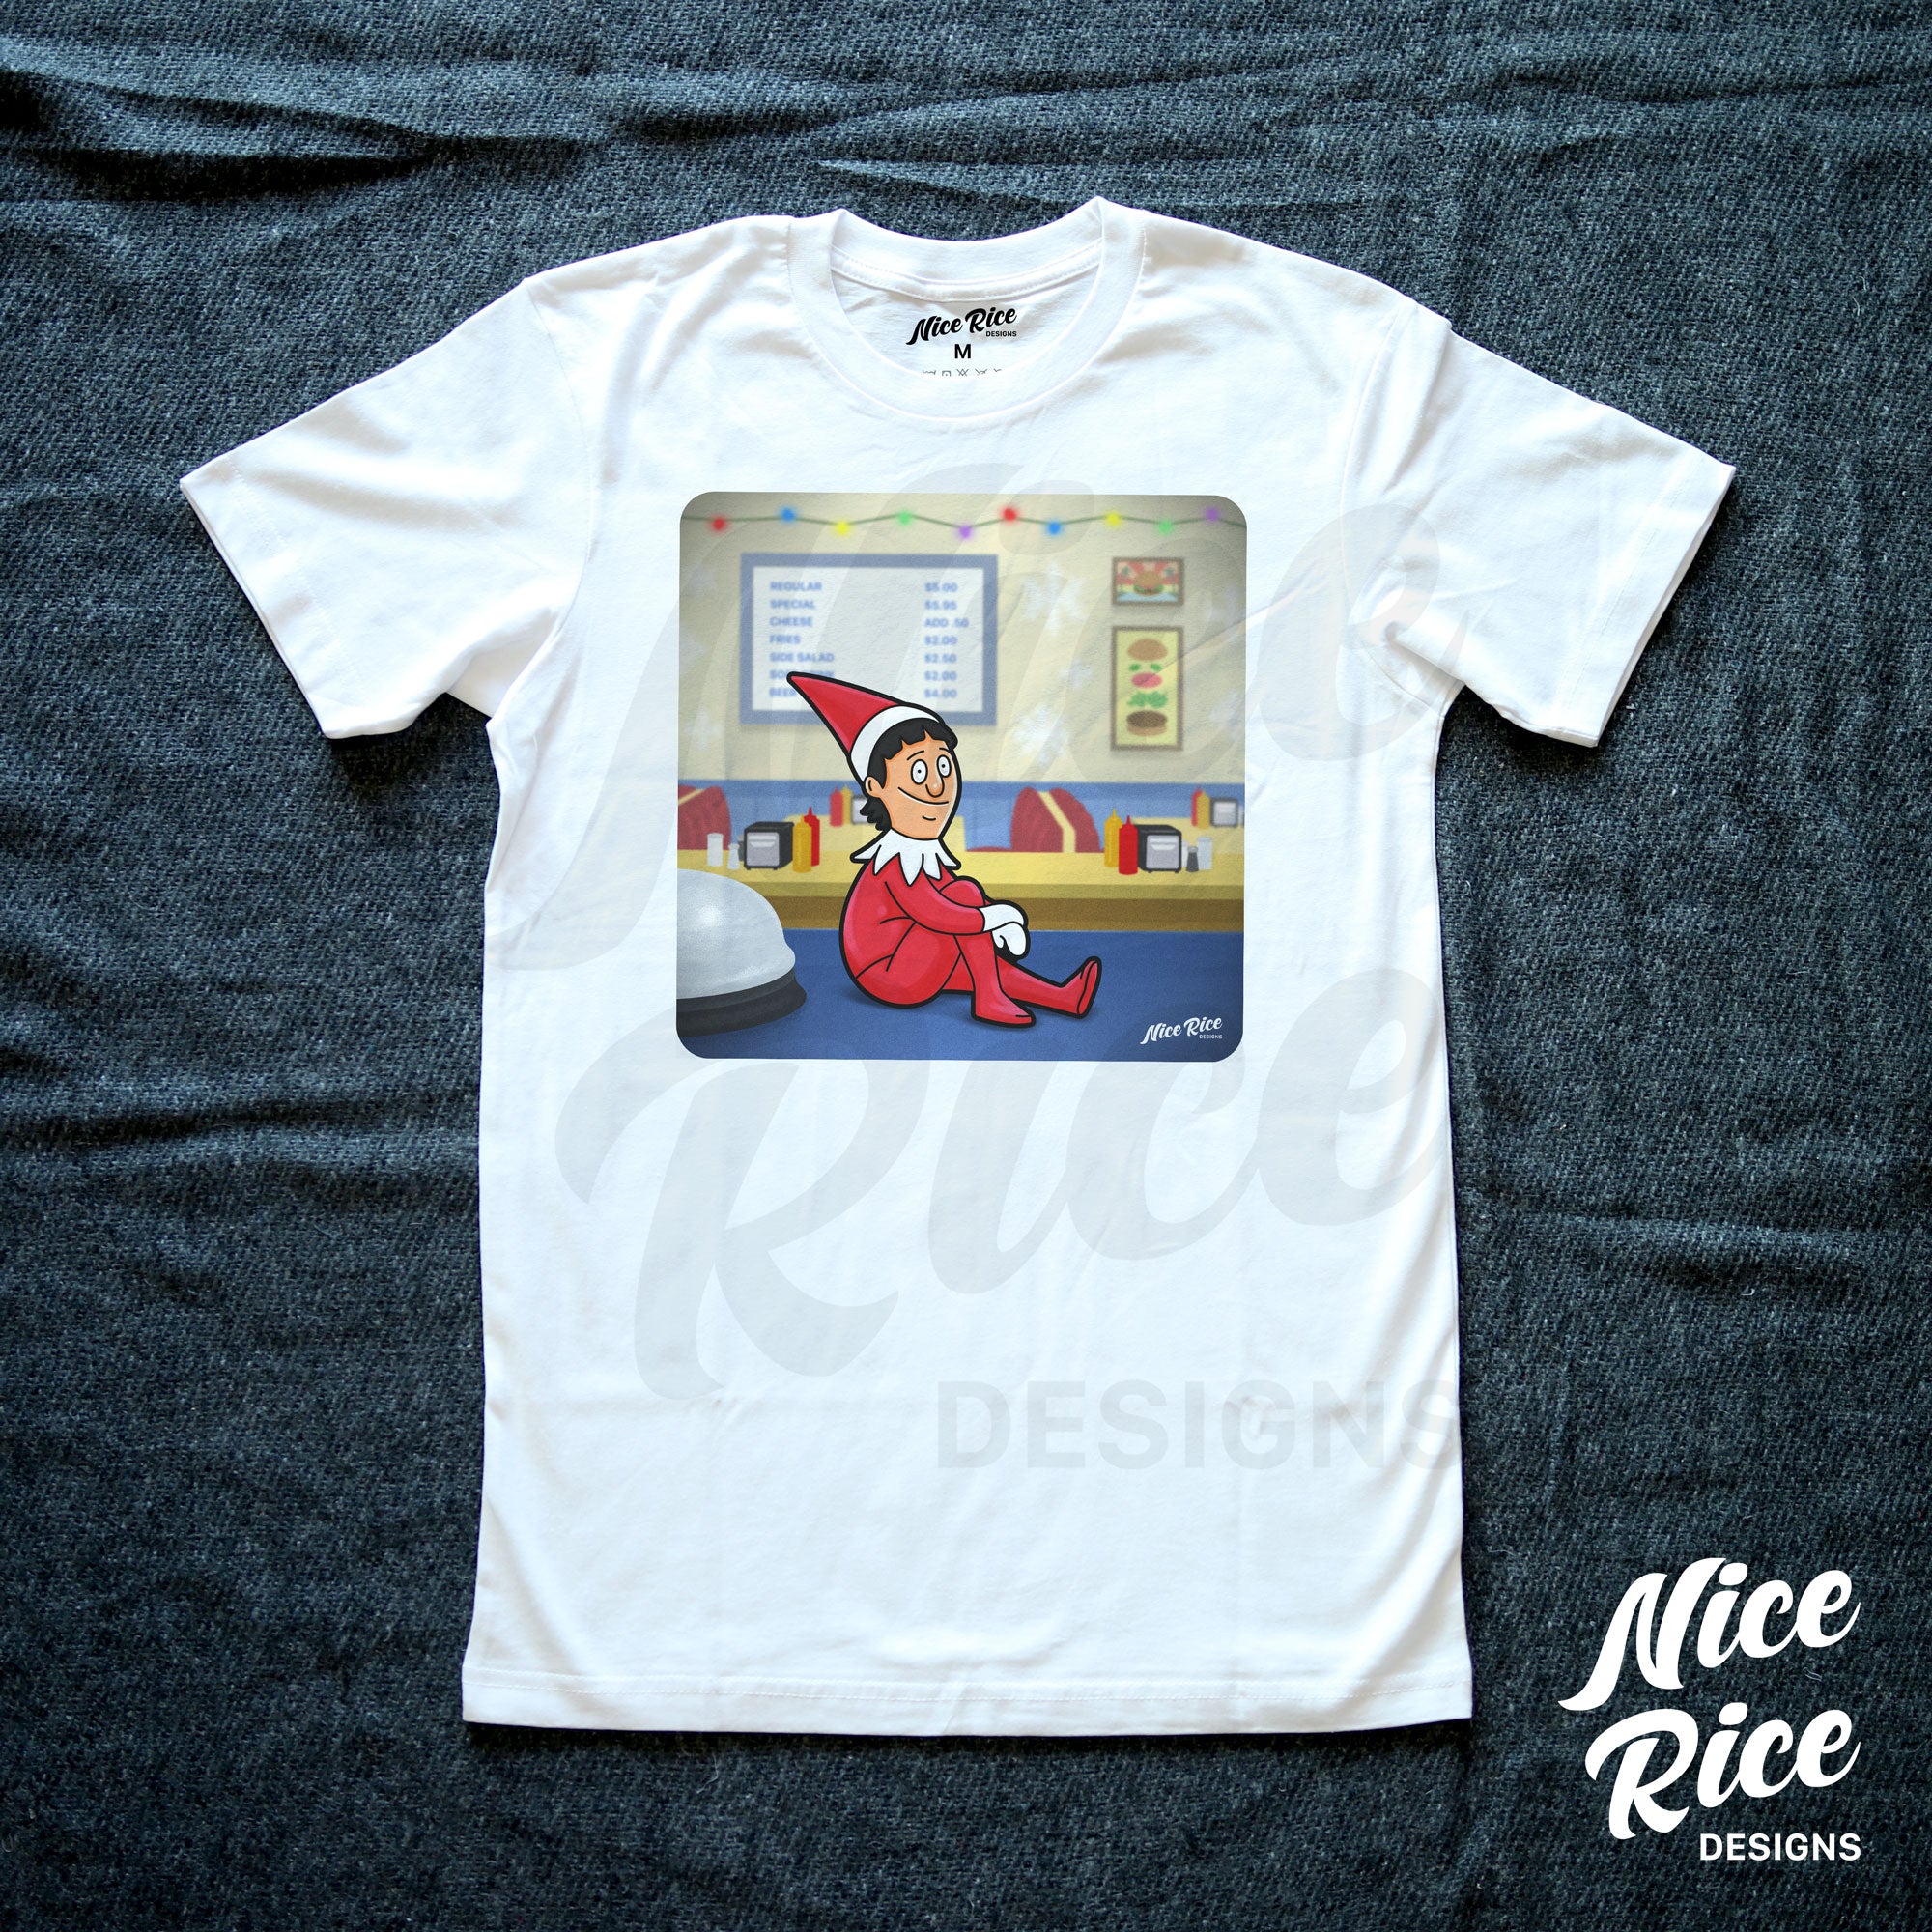 Gene on the Shelf Shirt by Nice Rice Designs